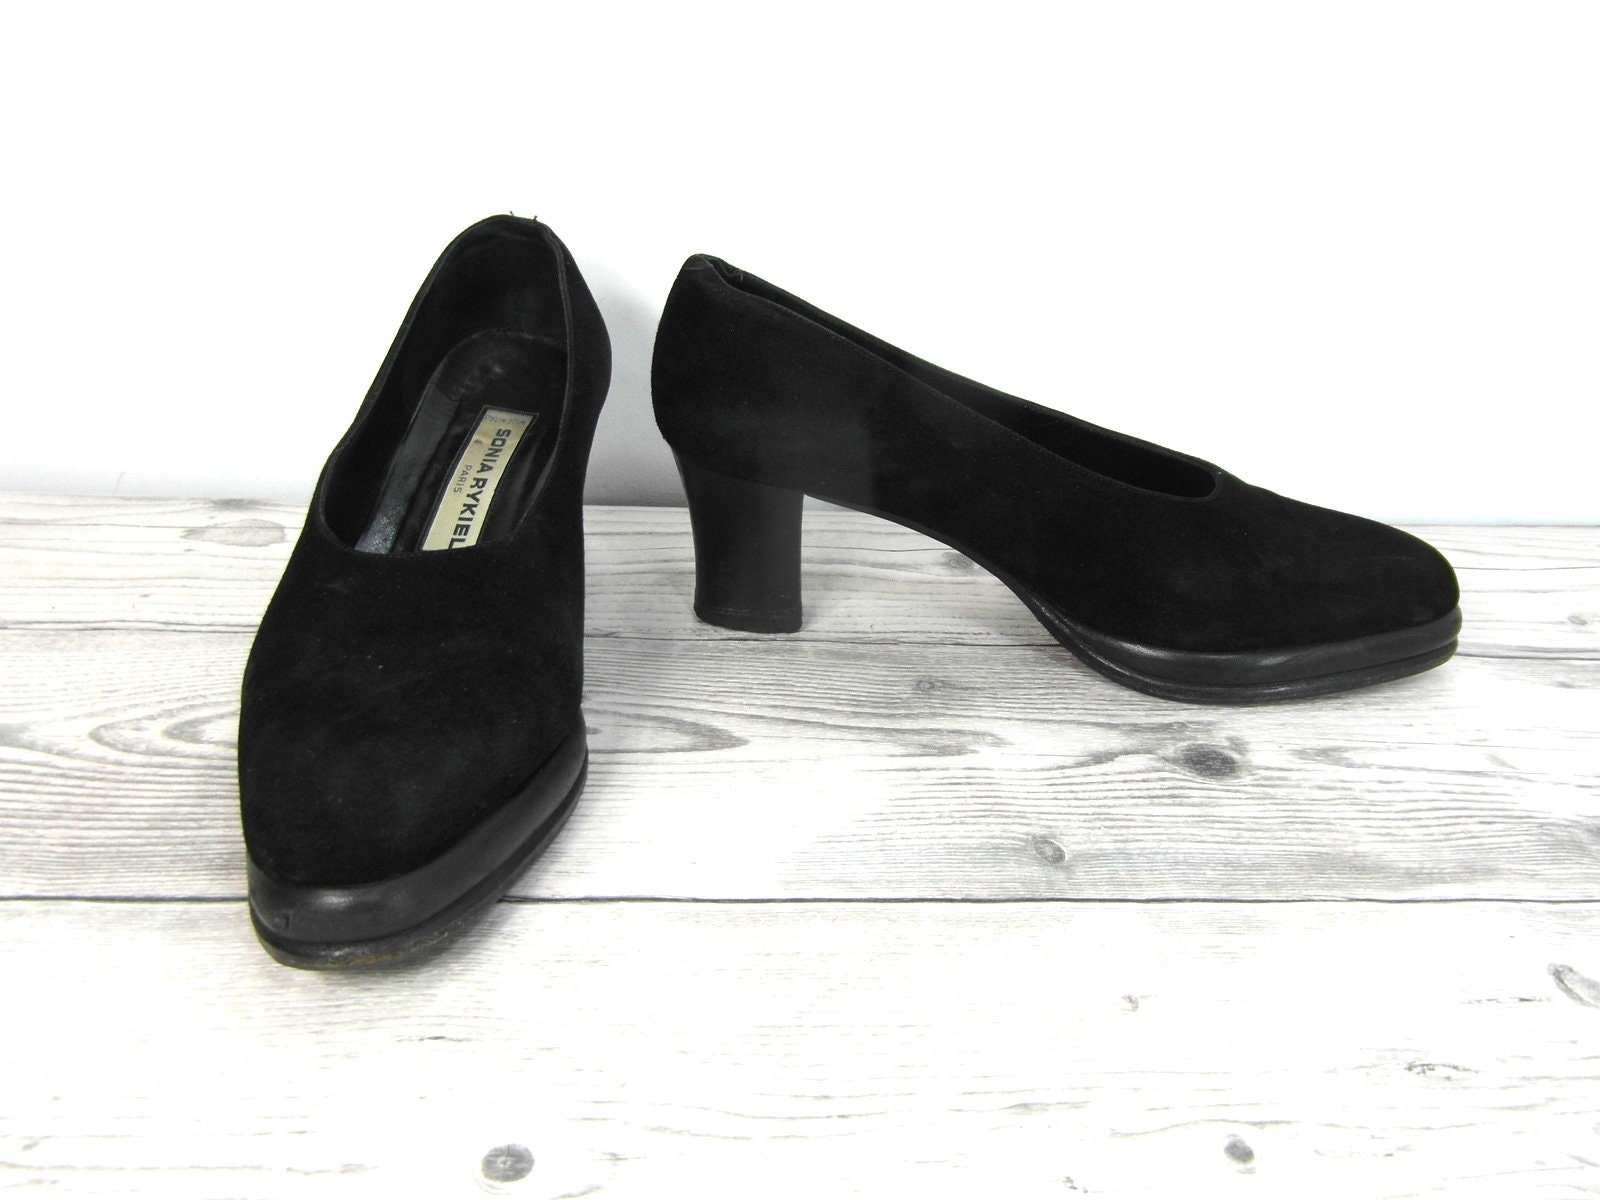 Sonia Rykiel Black Suede Shoes Size US 6.5 Uk 4 Aus 5 Eu - Etsy